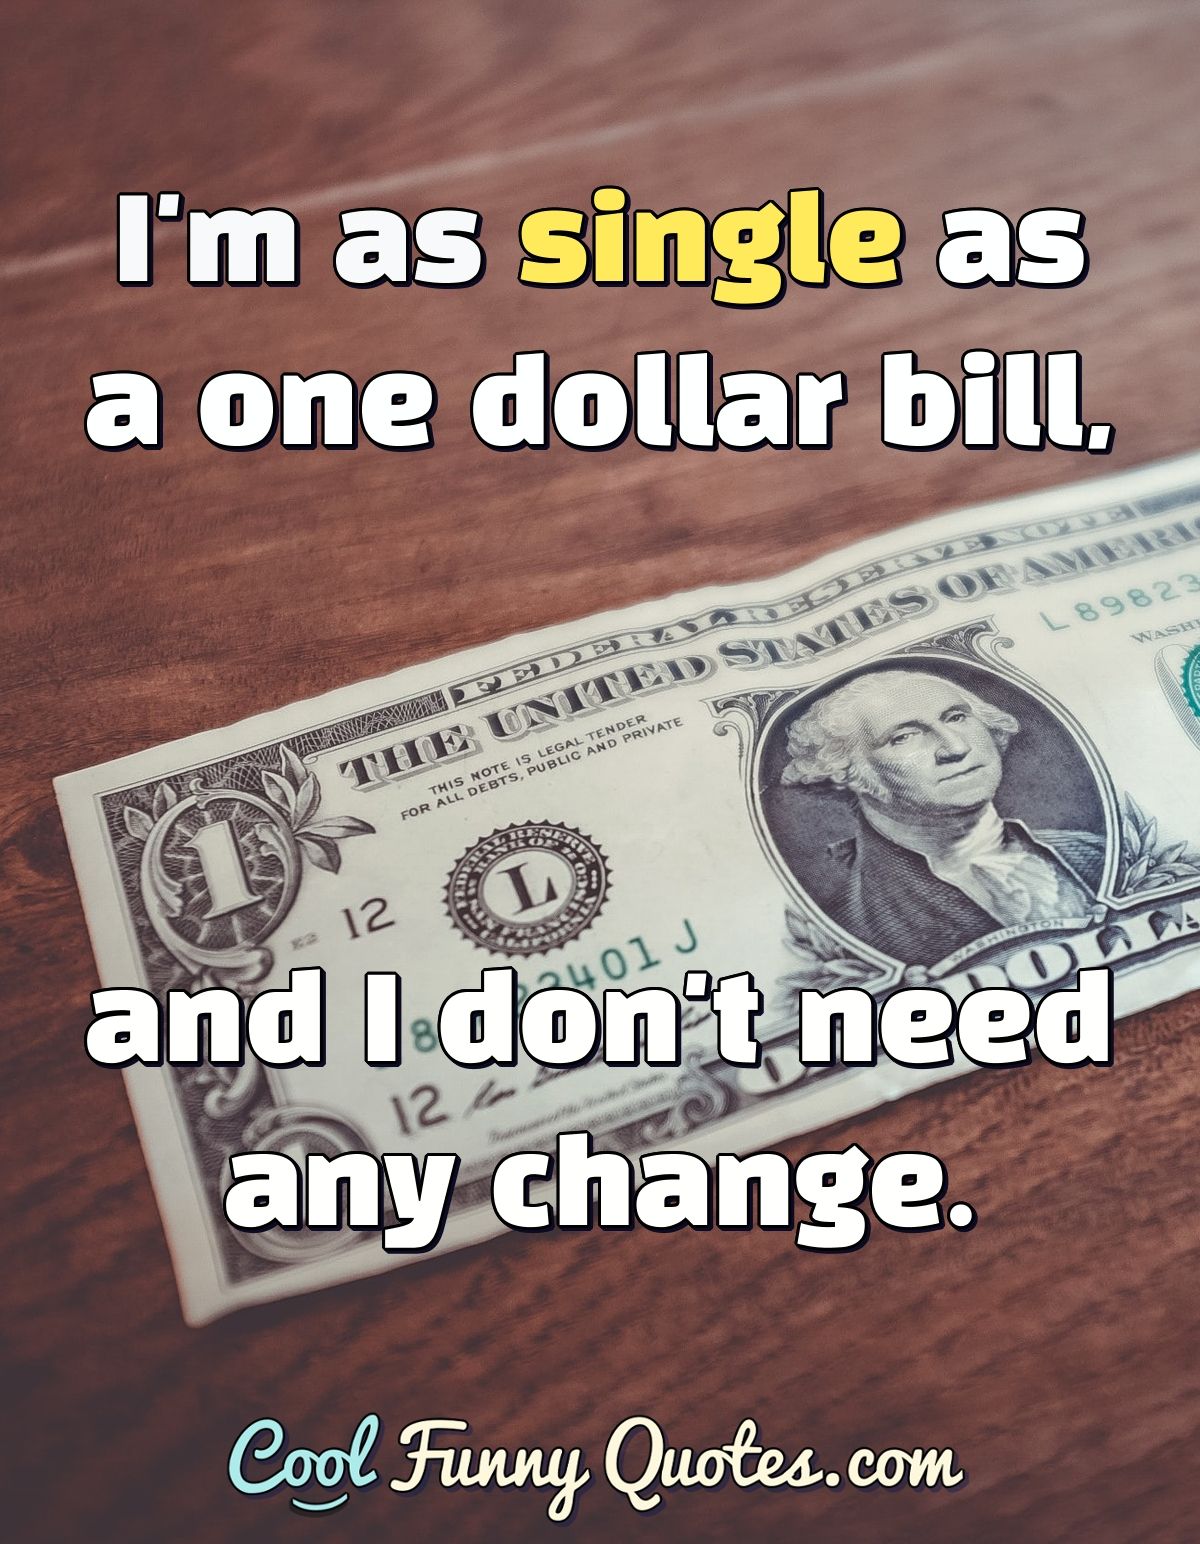 tf im as single as a one dollar